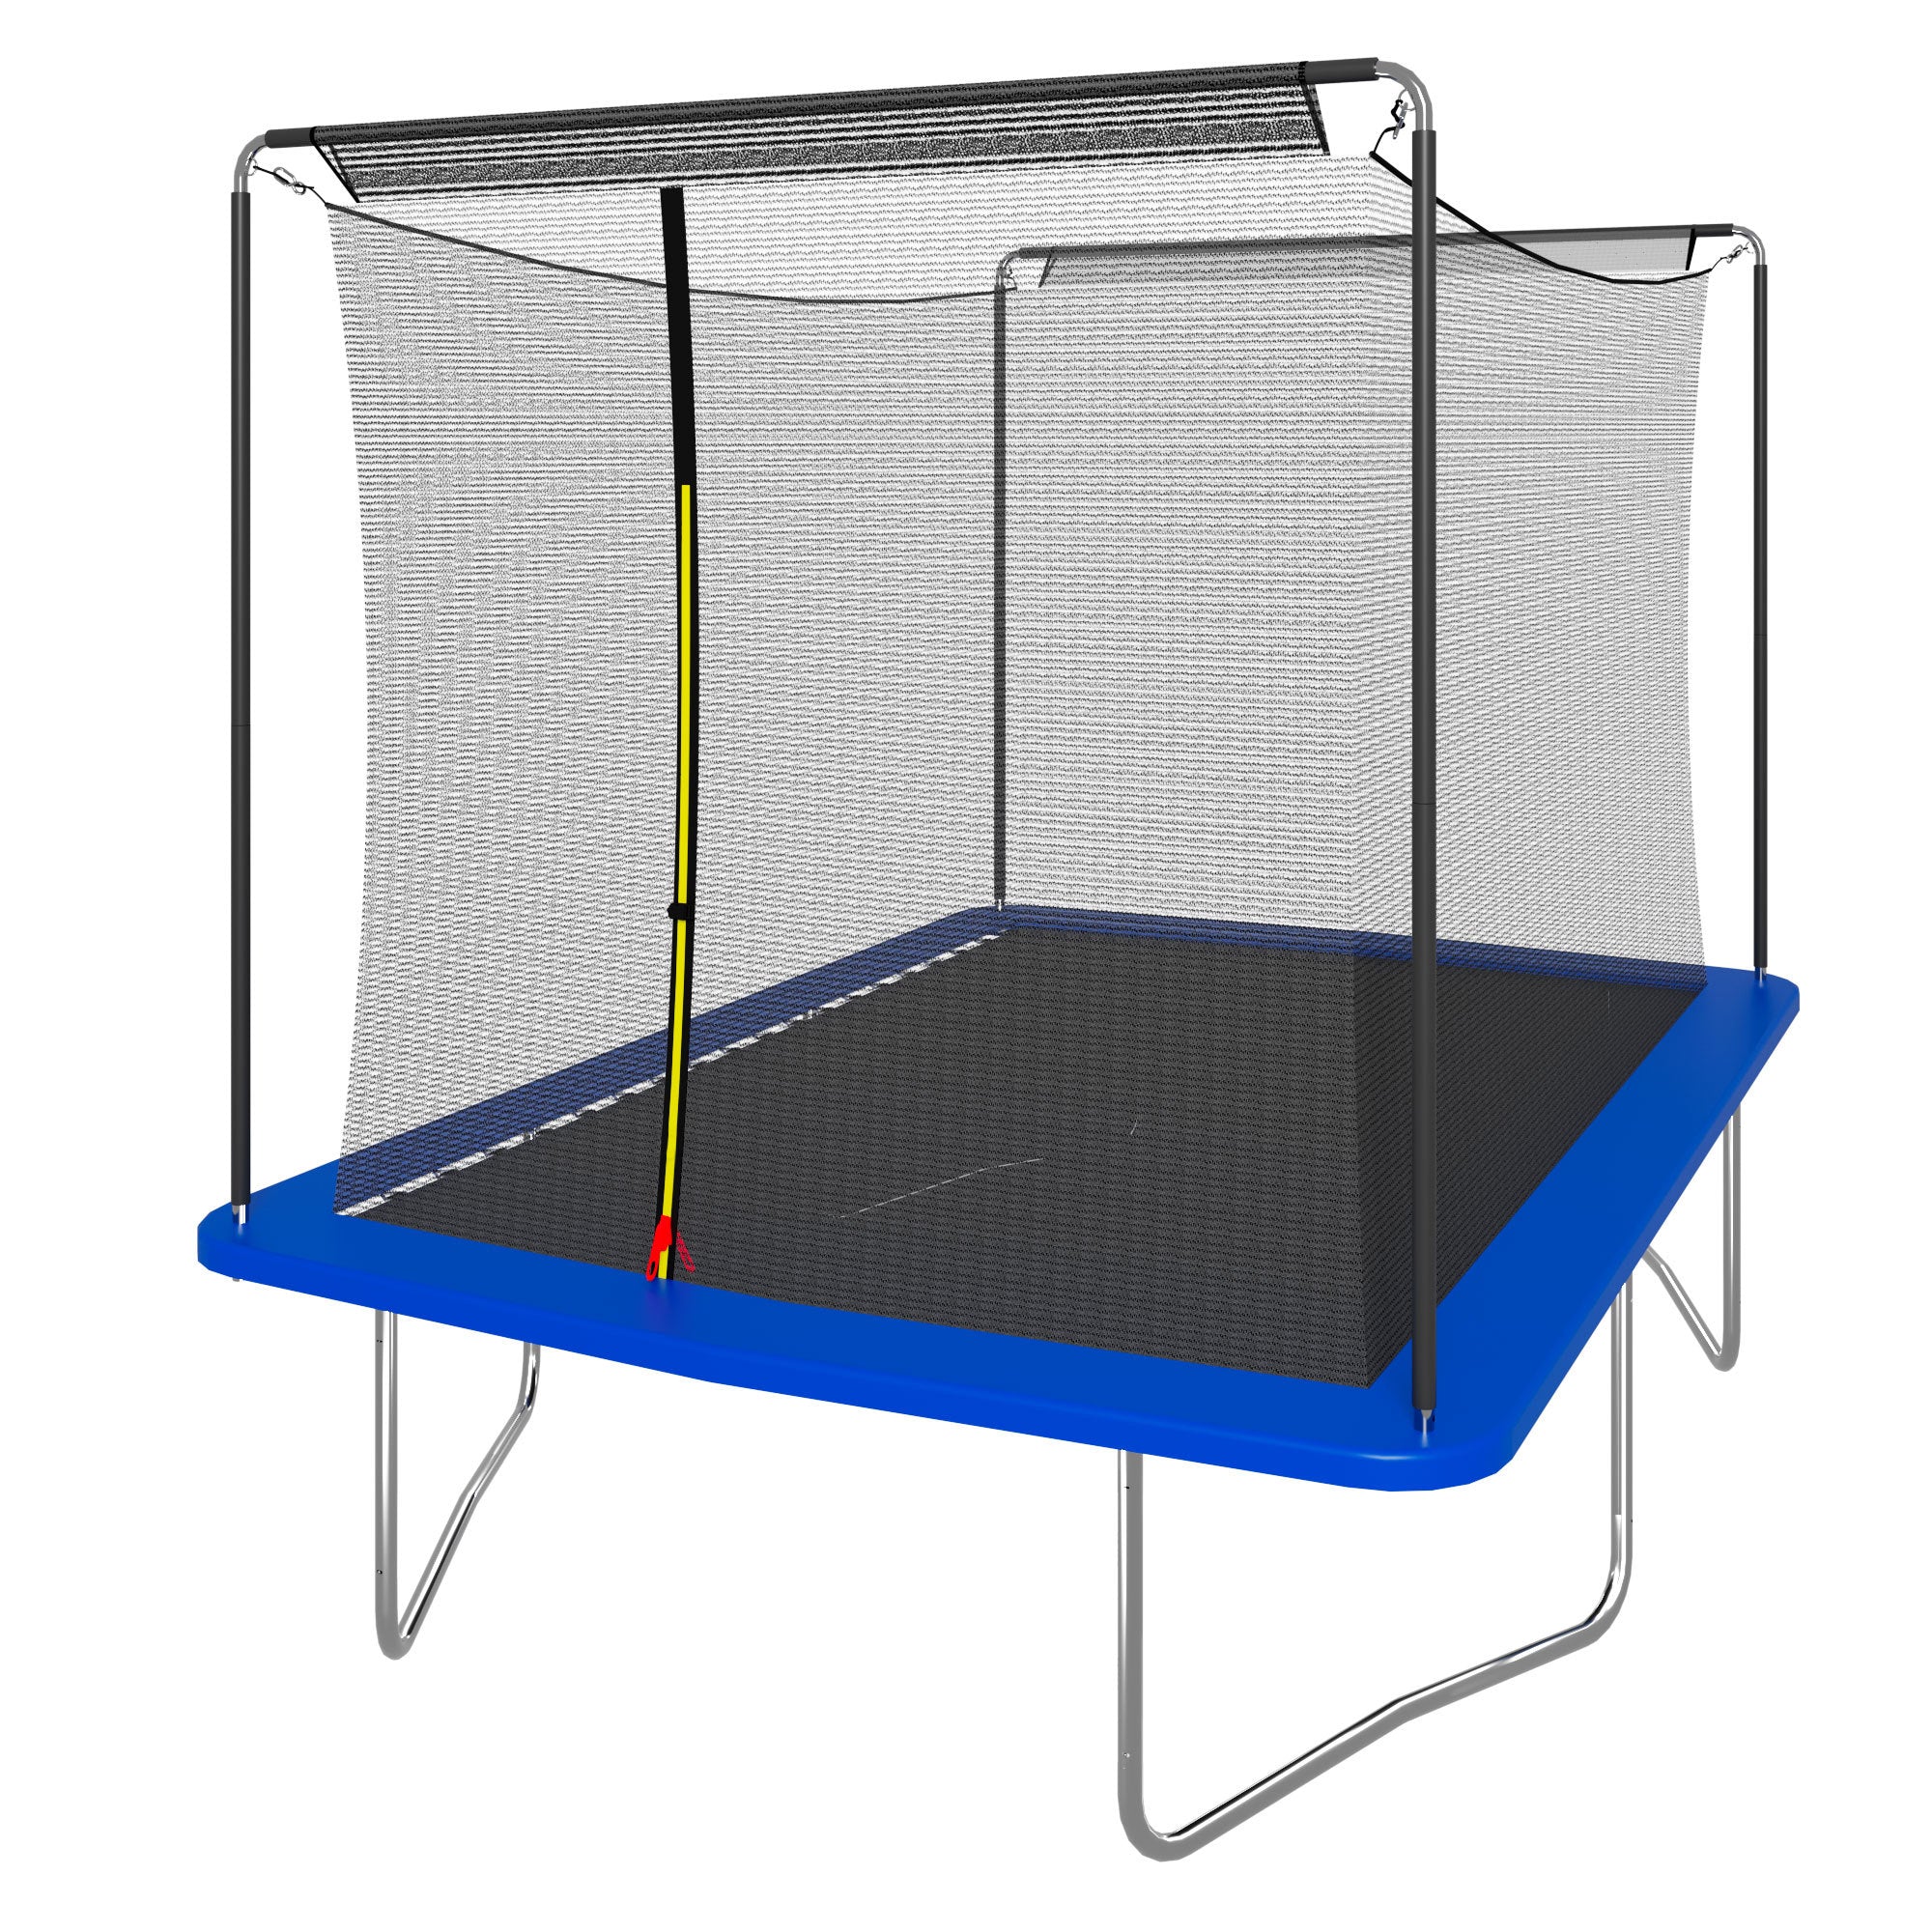 8ft by 12ft rectangular trampoline blue Astm